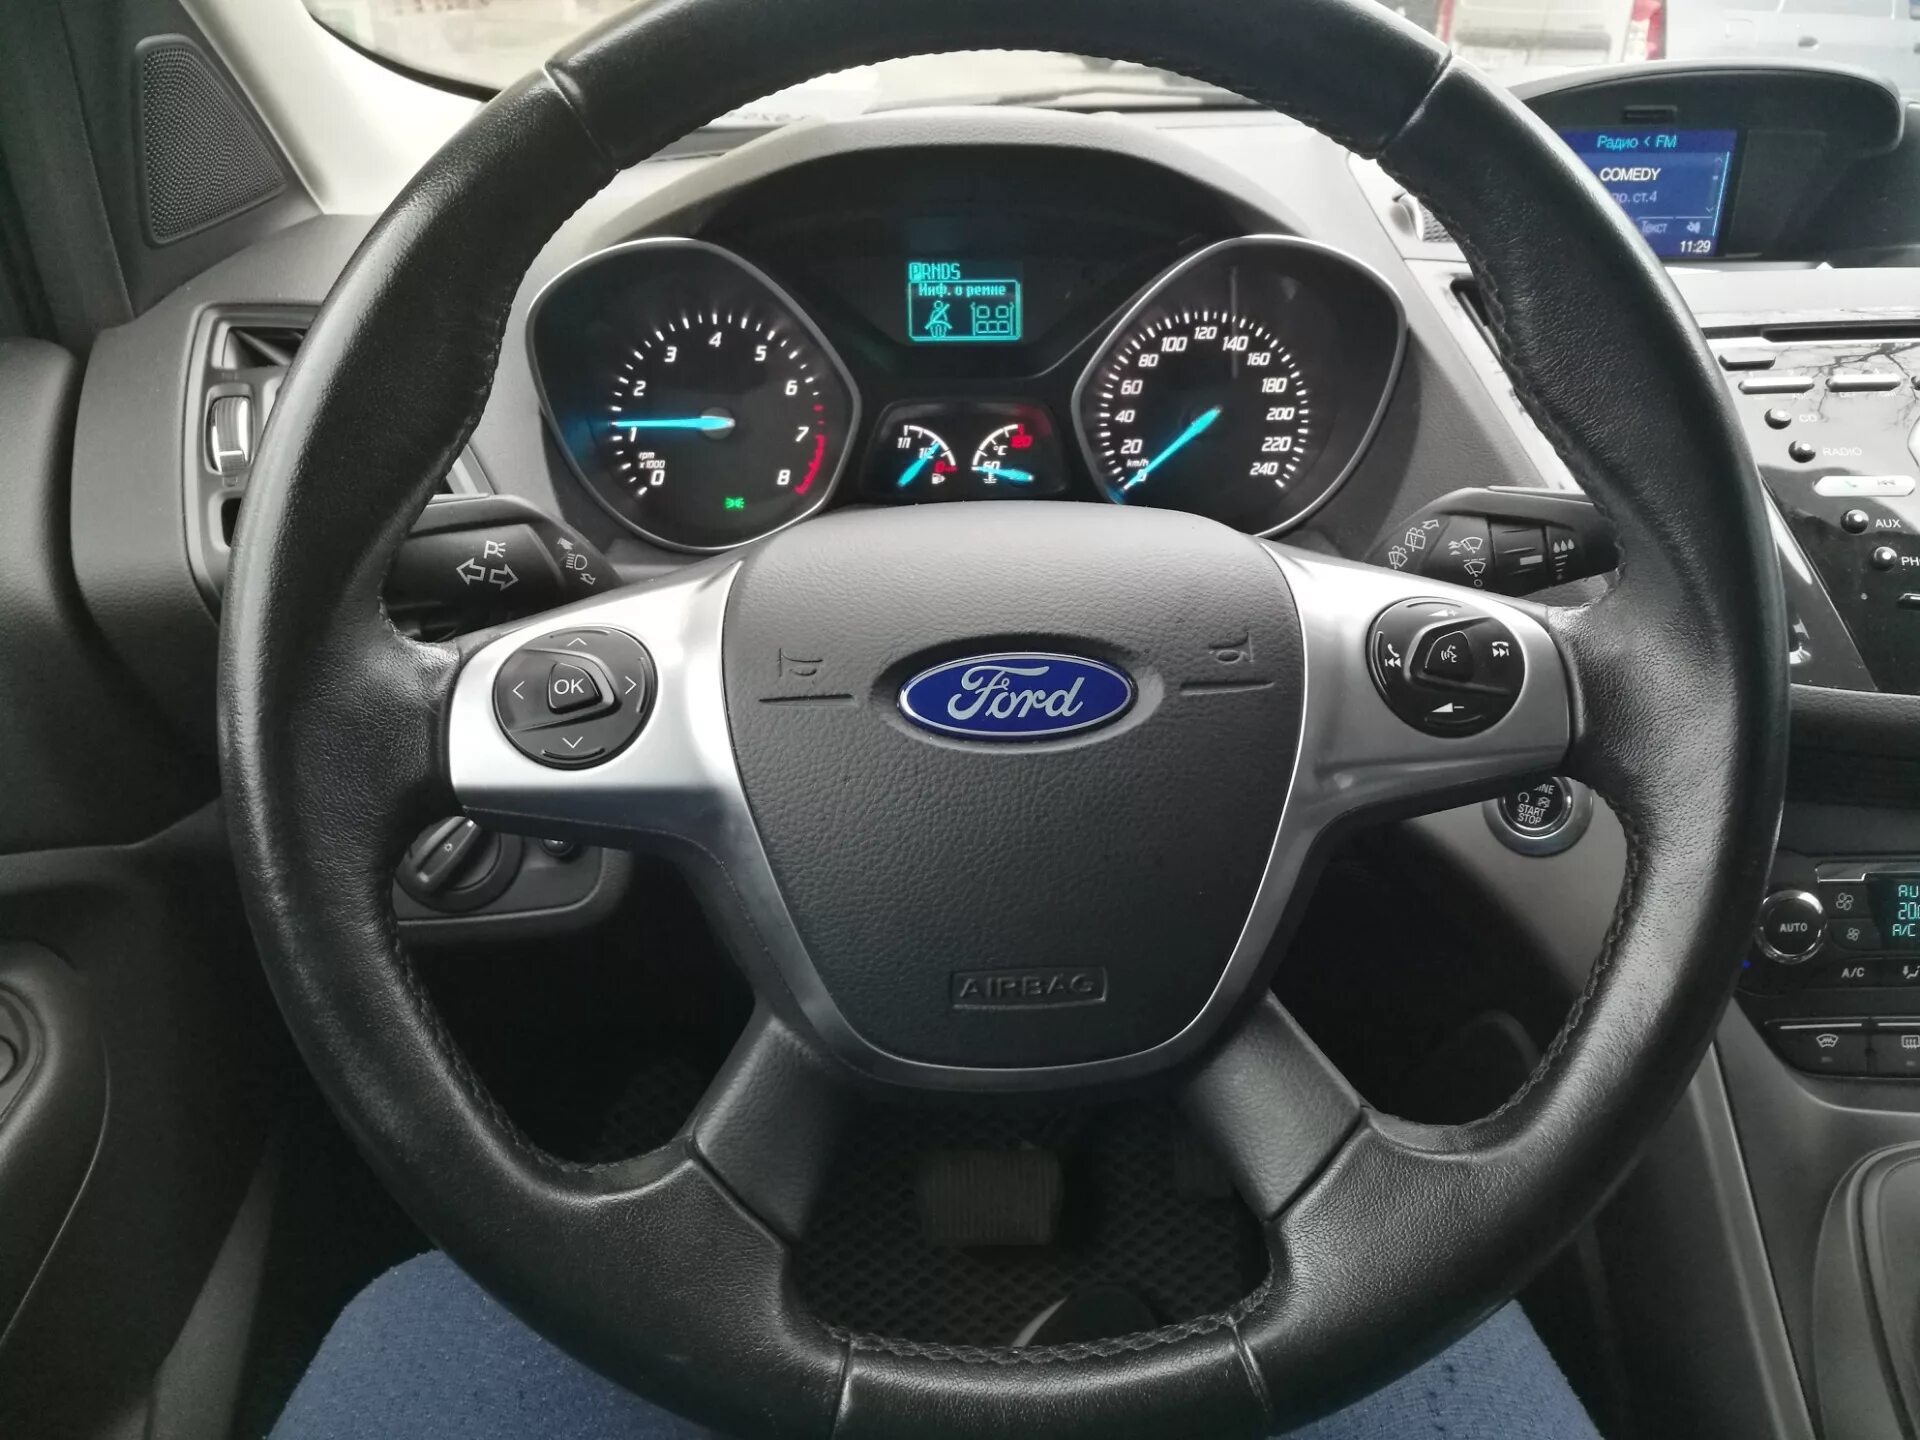 Ford Kuga 2015 руль. Руль от Форд Куга 2020. Руль Форд фокус 2 дорестайл.